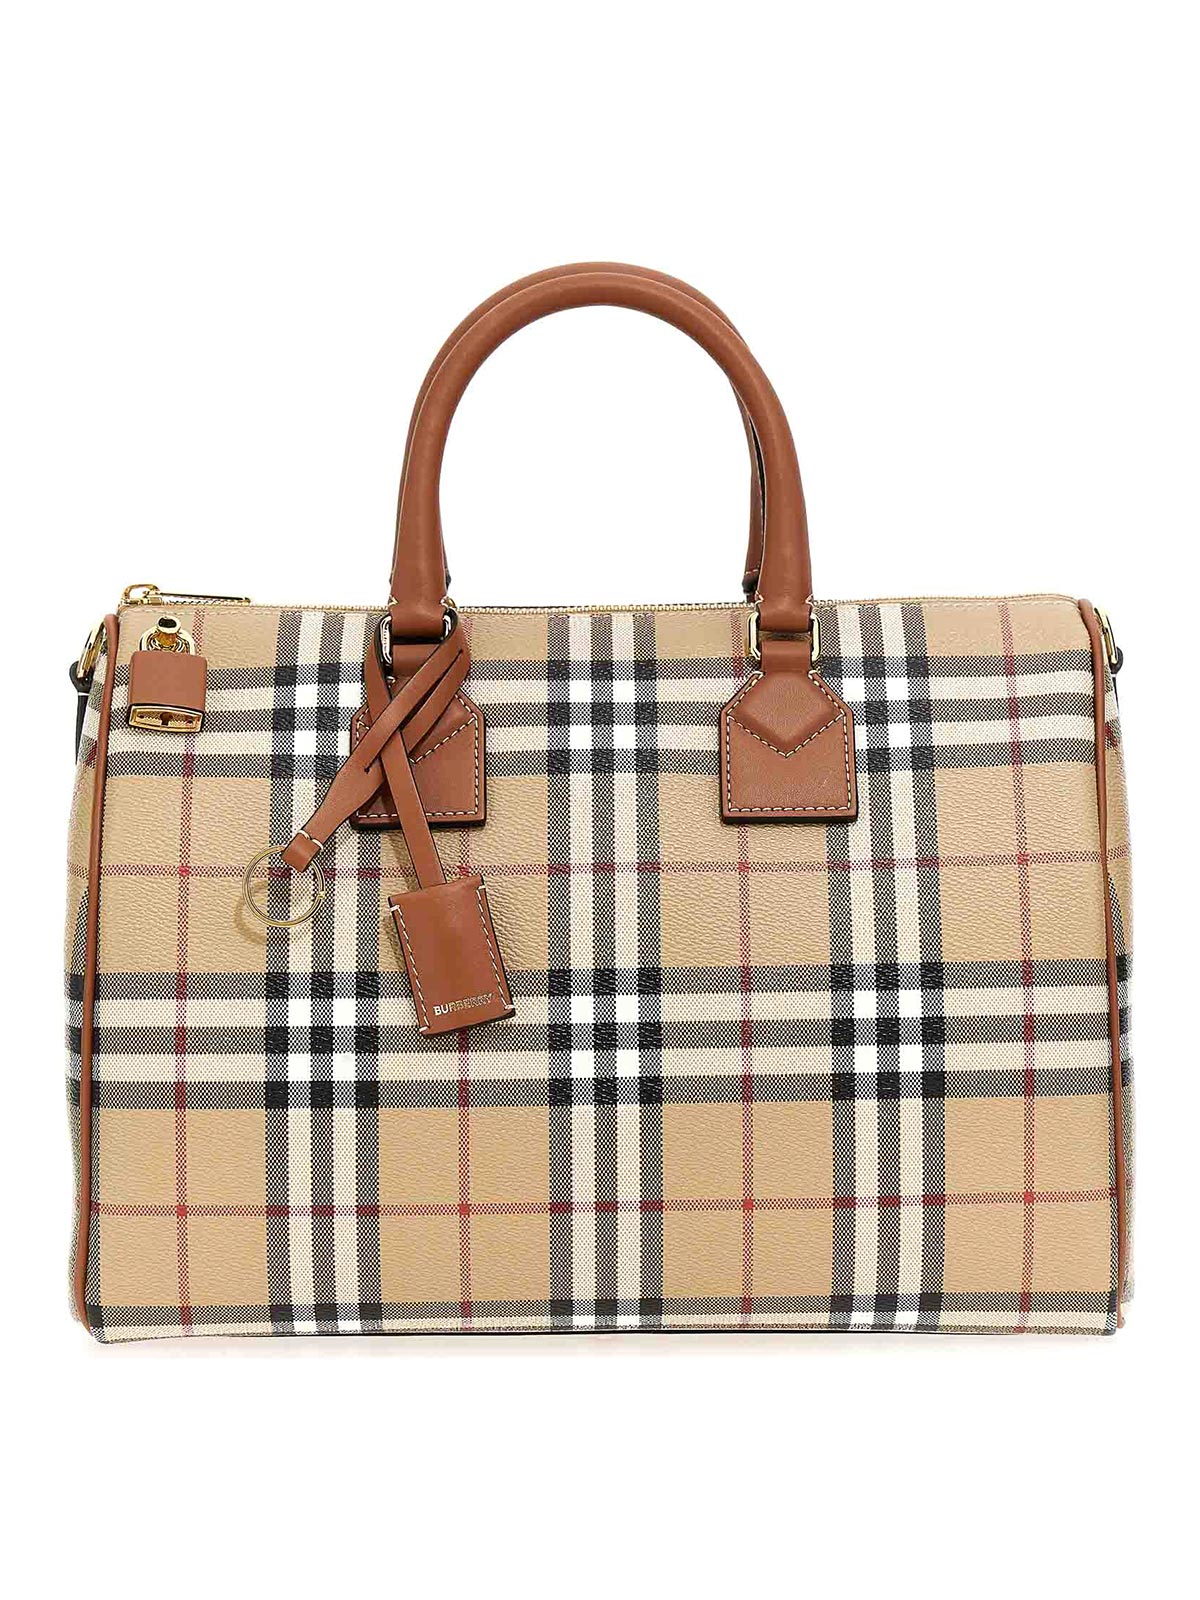 Burberry, Bags, Burberry Travel Luggage Bag